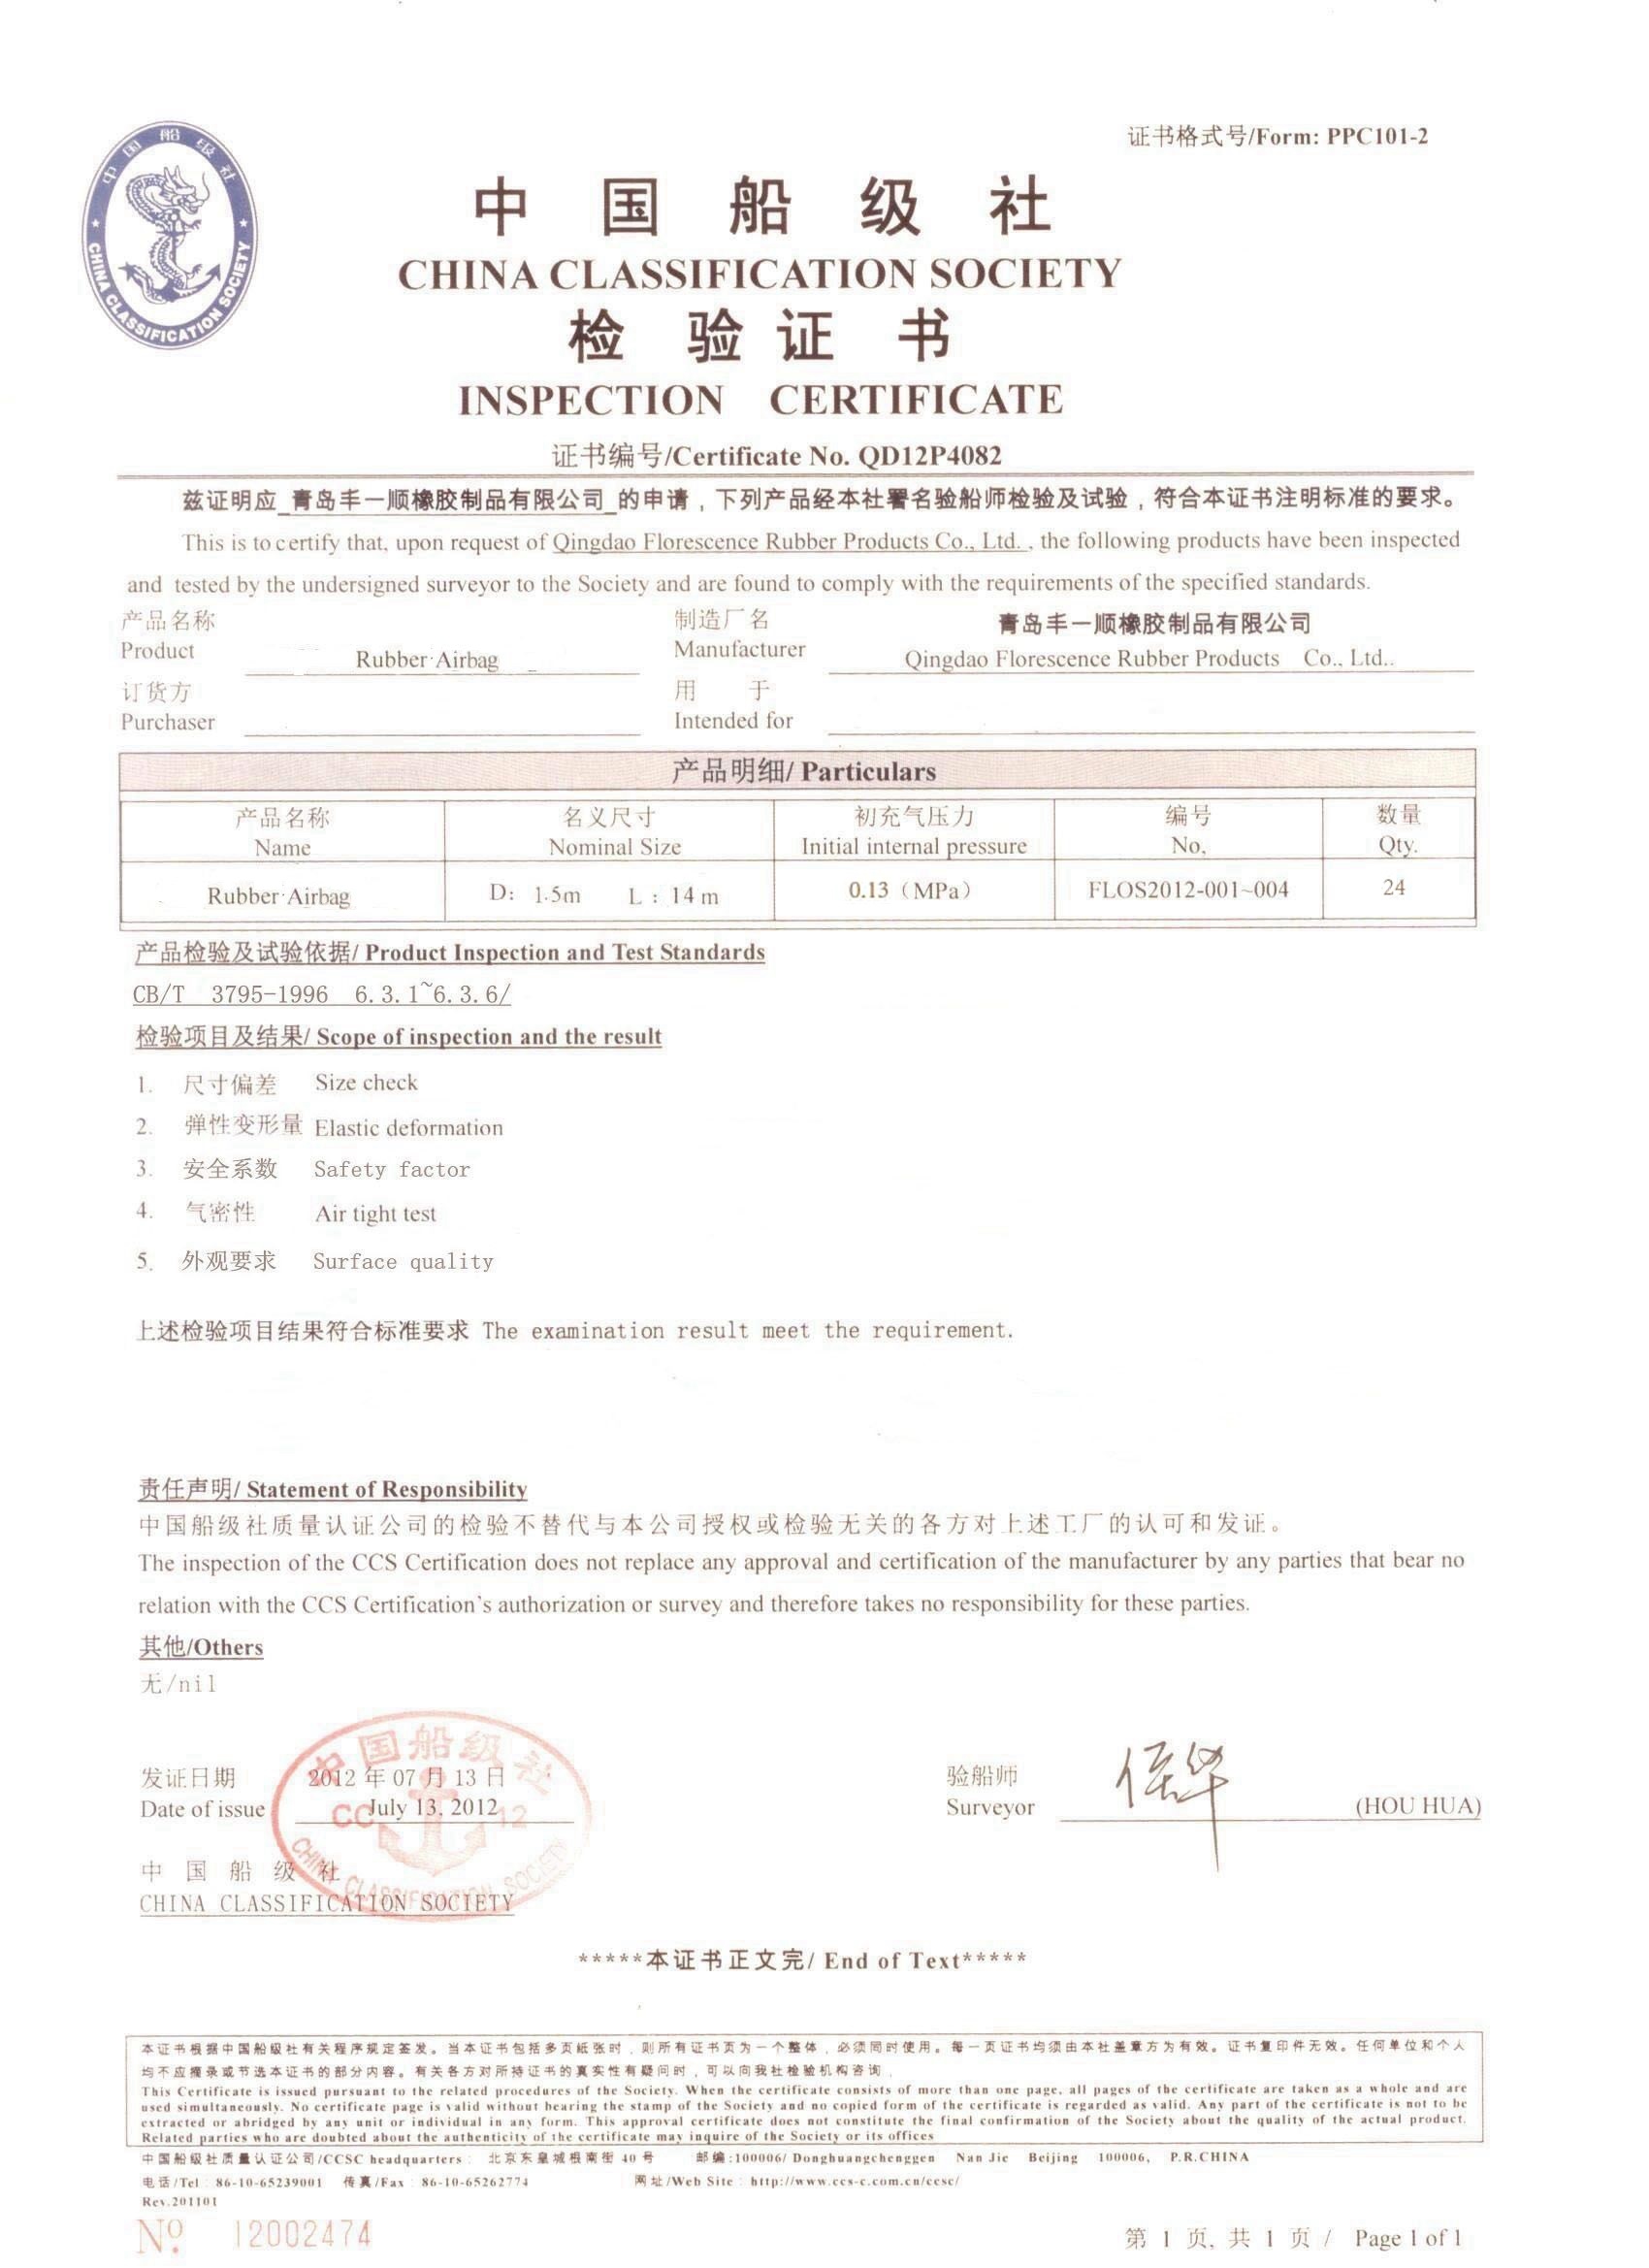 CCS certificate airbag